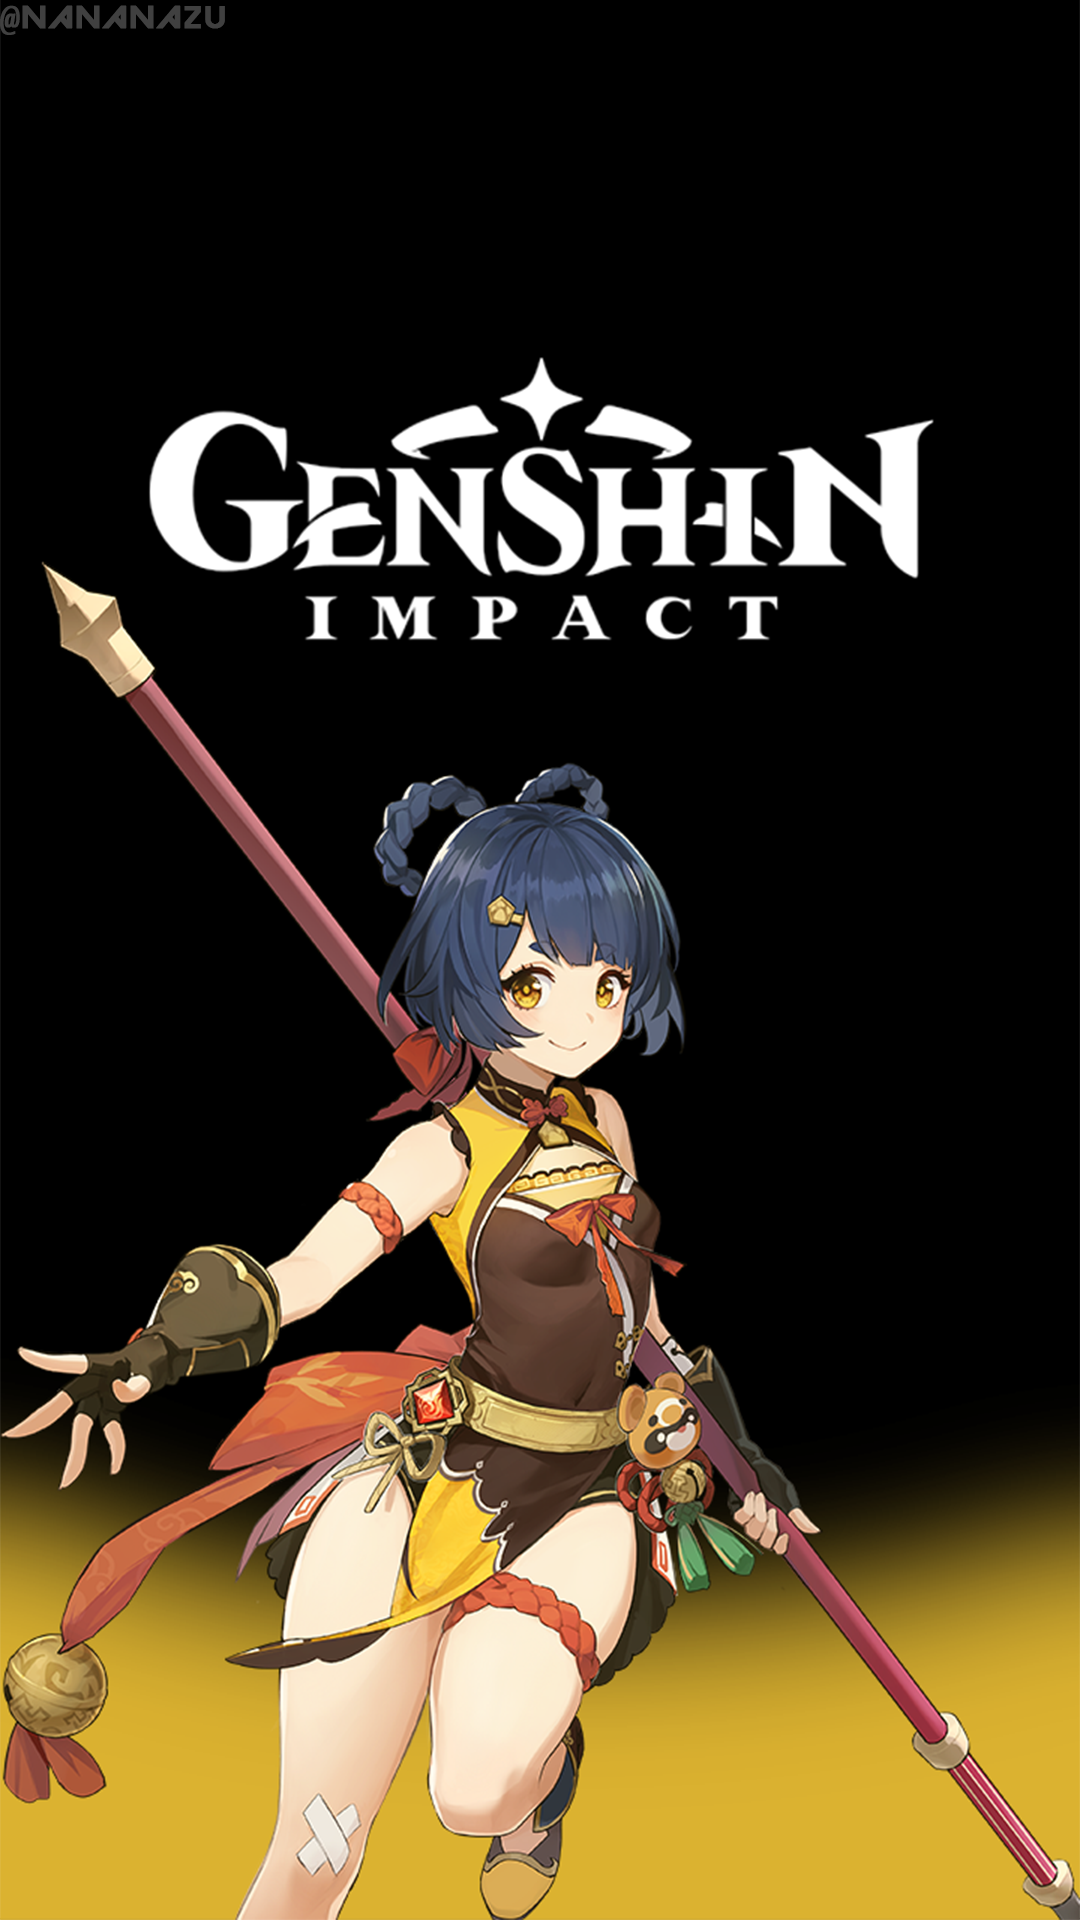 Genshin Impact Xiangling Wallpaper Android. Game character, Impact, Anime